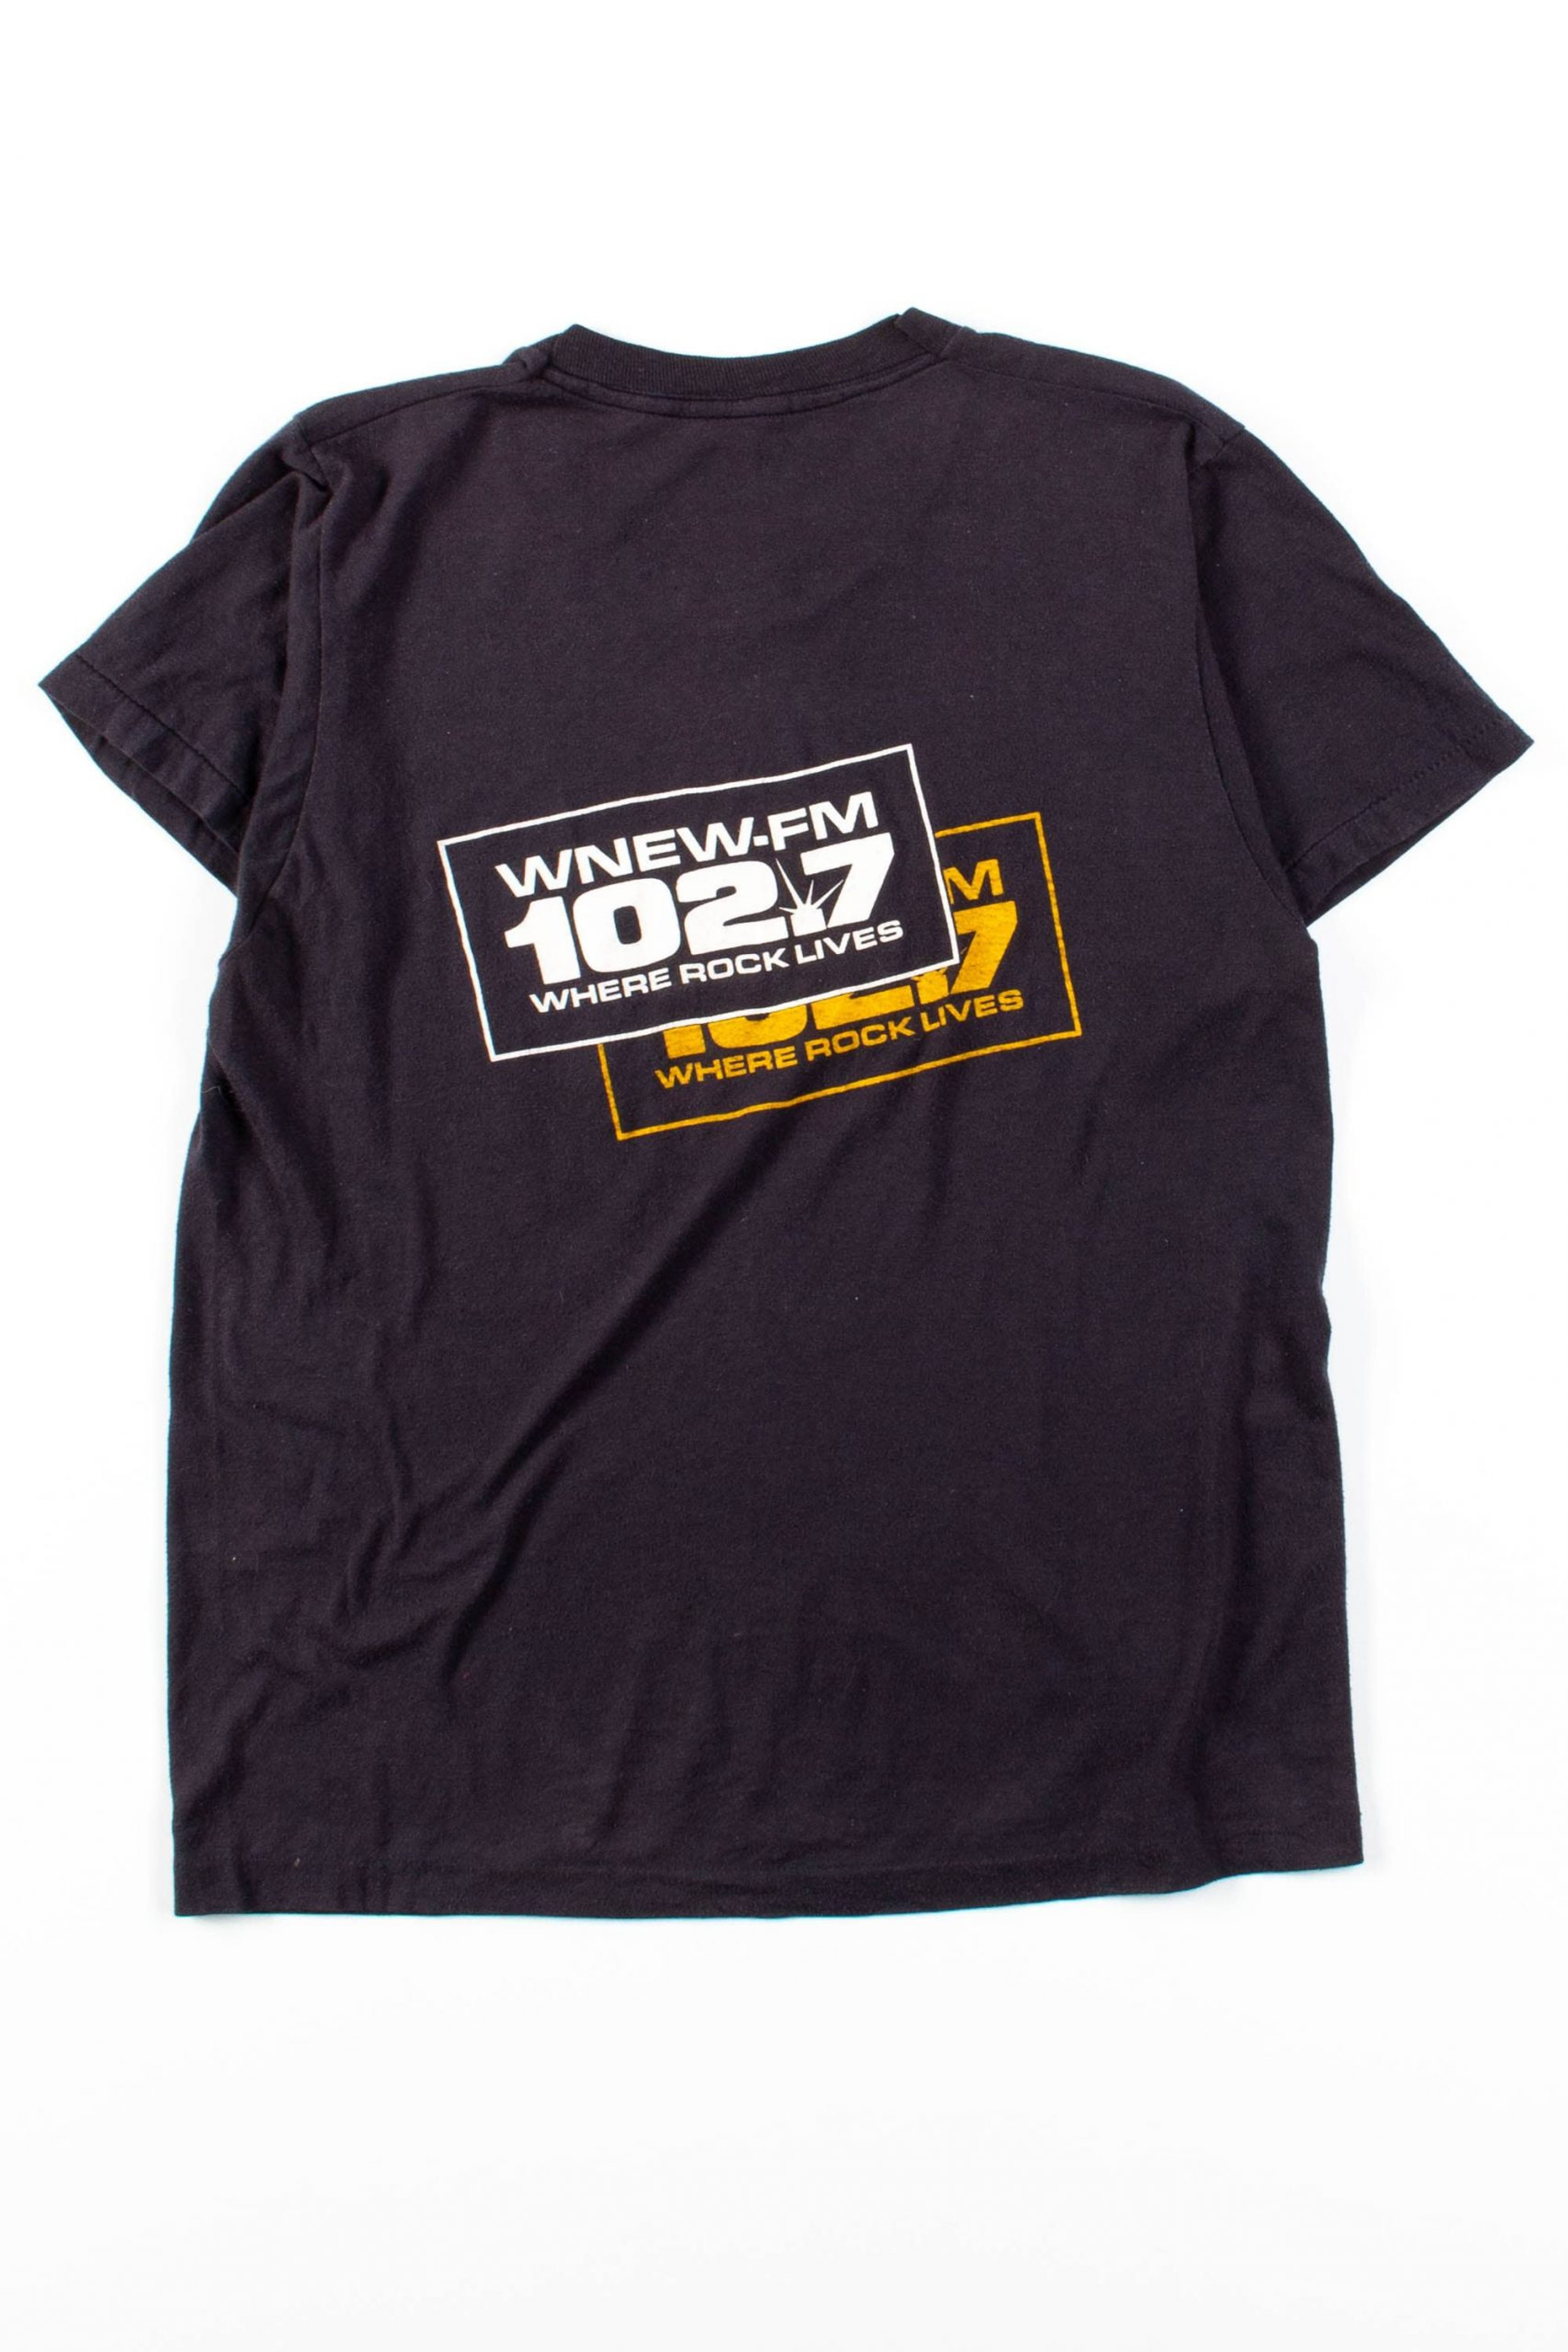 Bruce Is Back WNEW-FM Vintage T-Shirt - Ragstock.com